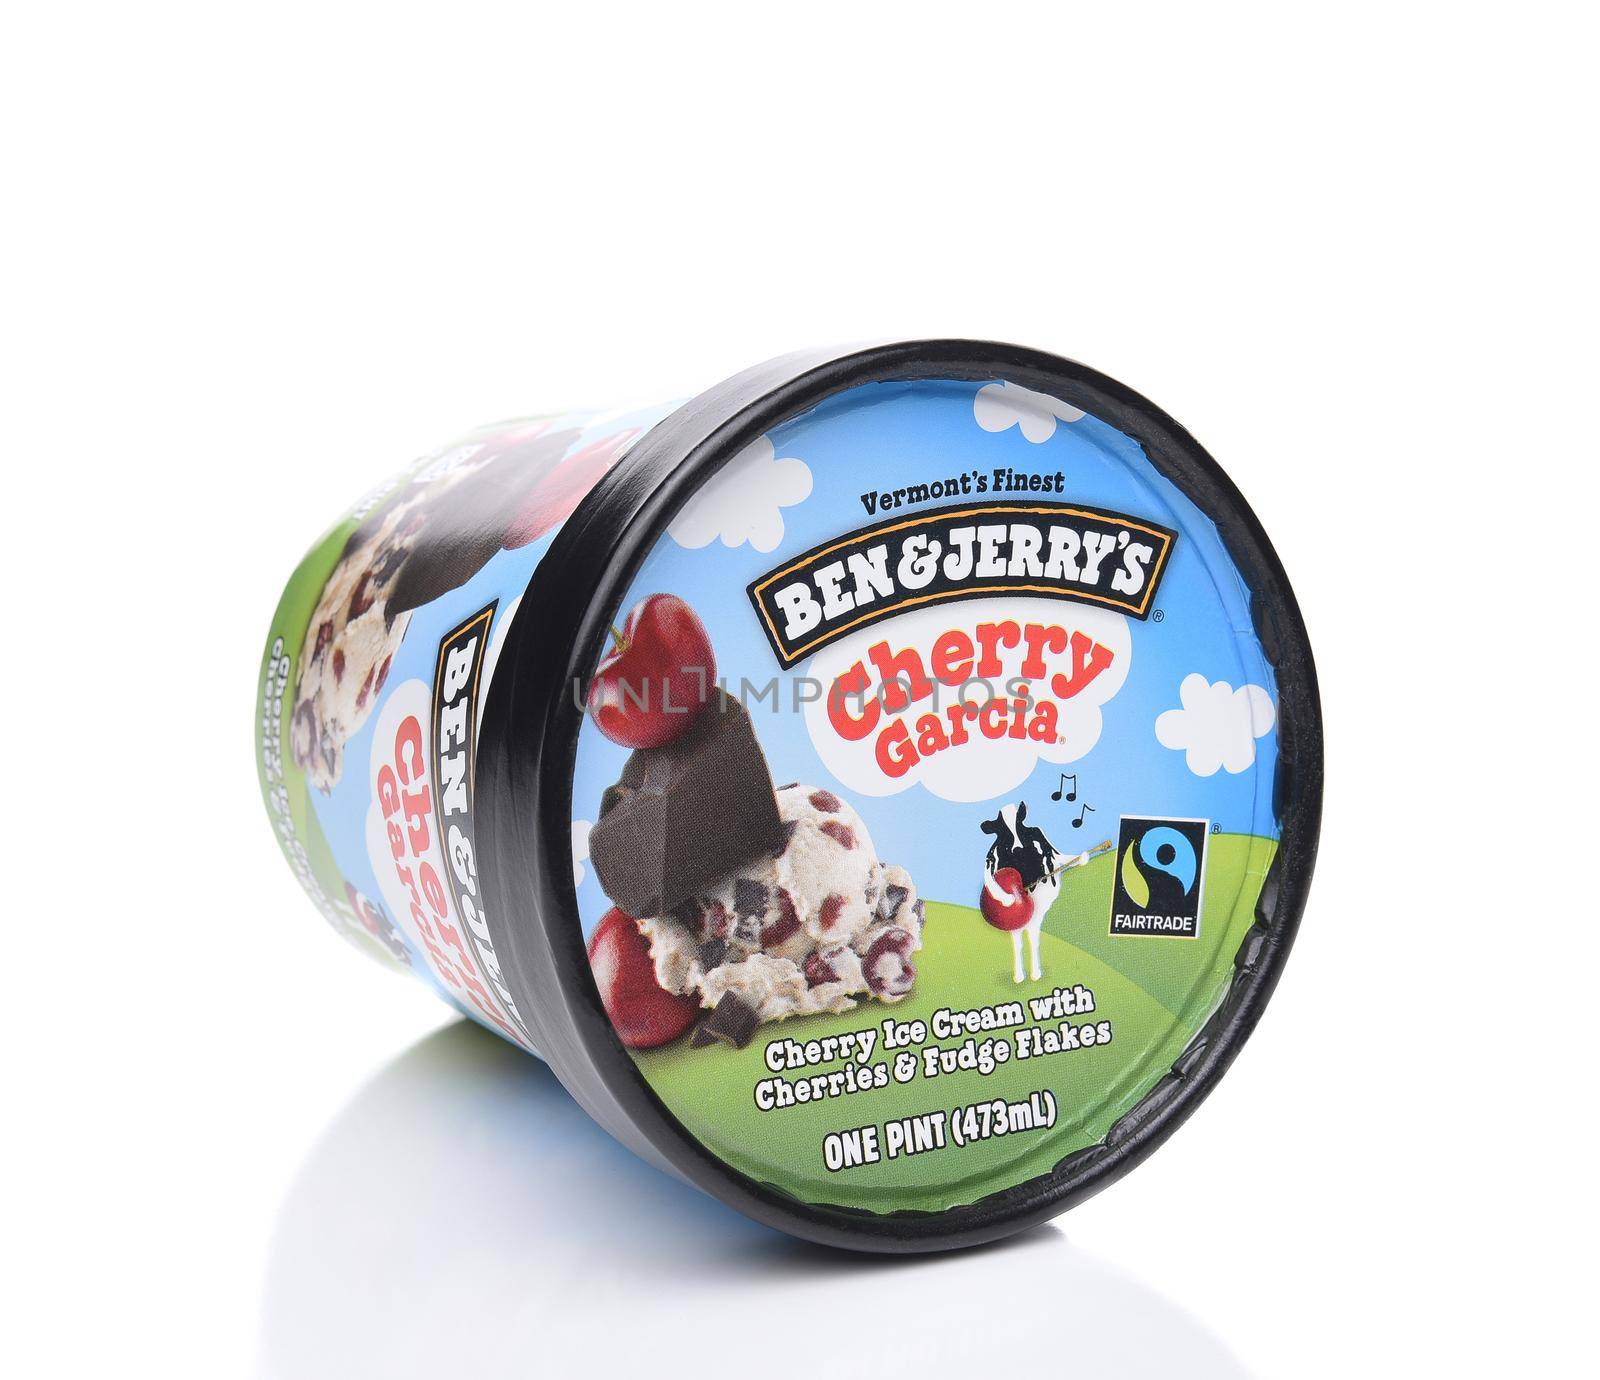 Cherry Garcia Ice Cream by sCukrov